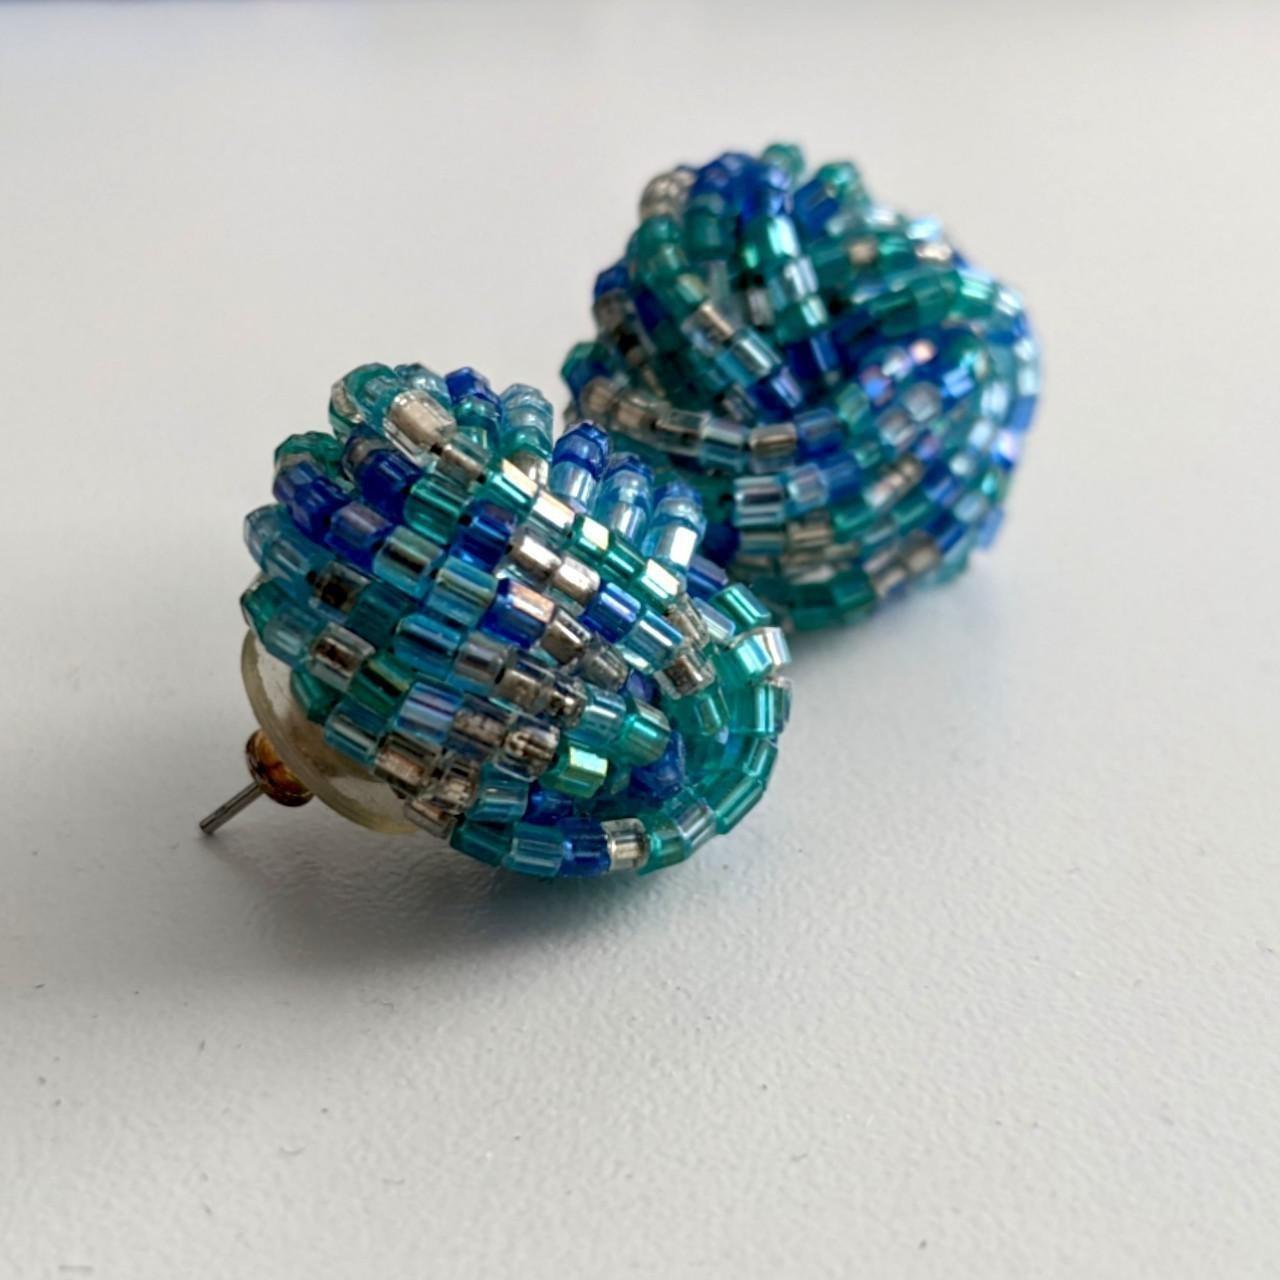 Product Image 3 - Beaded Knot Earrings

Beautiful blue green